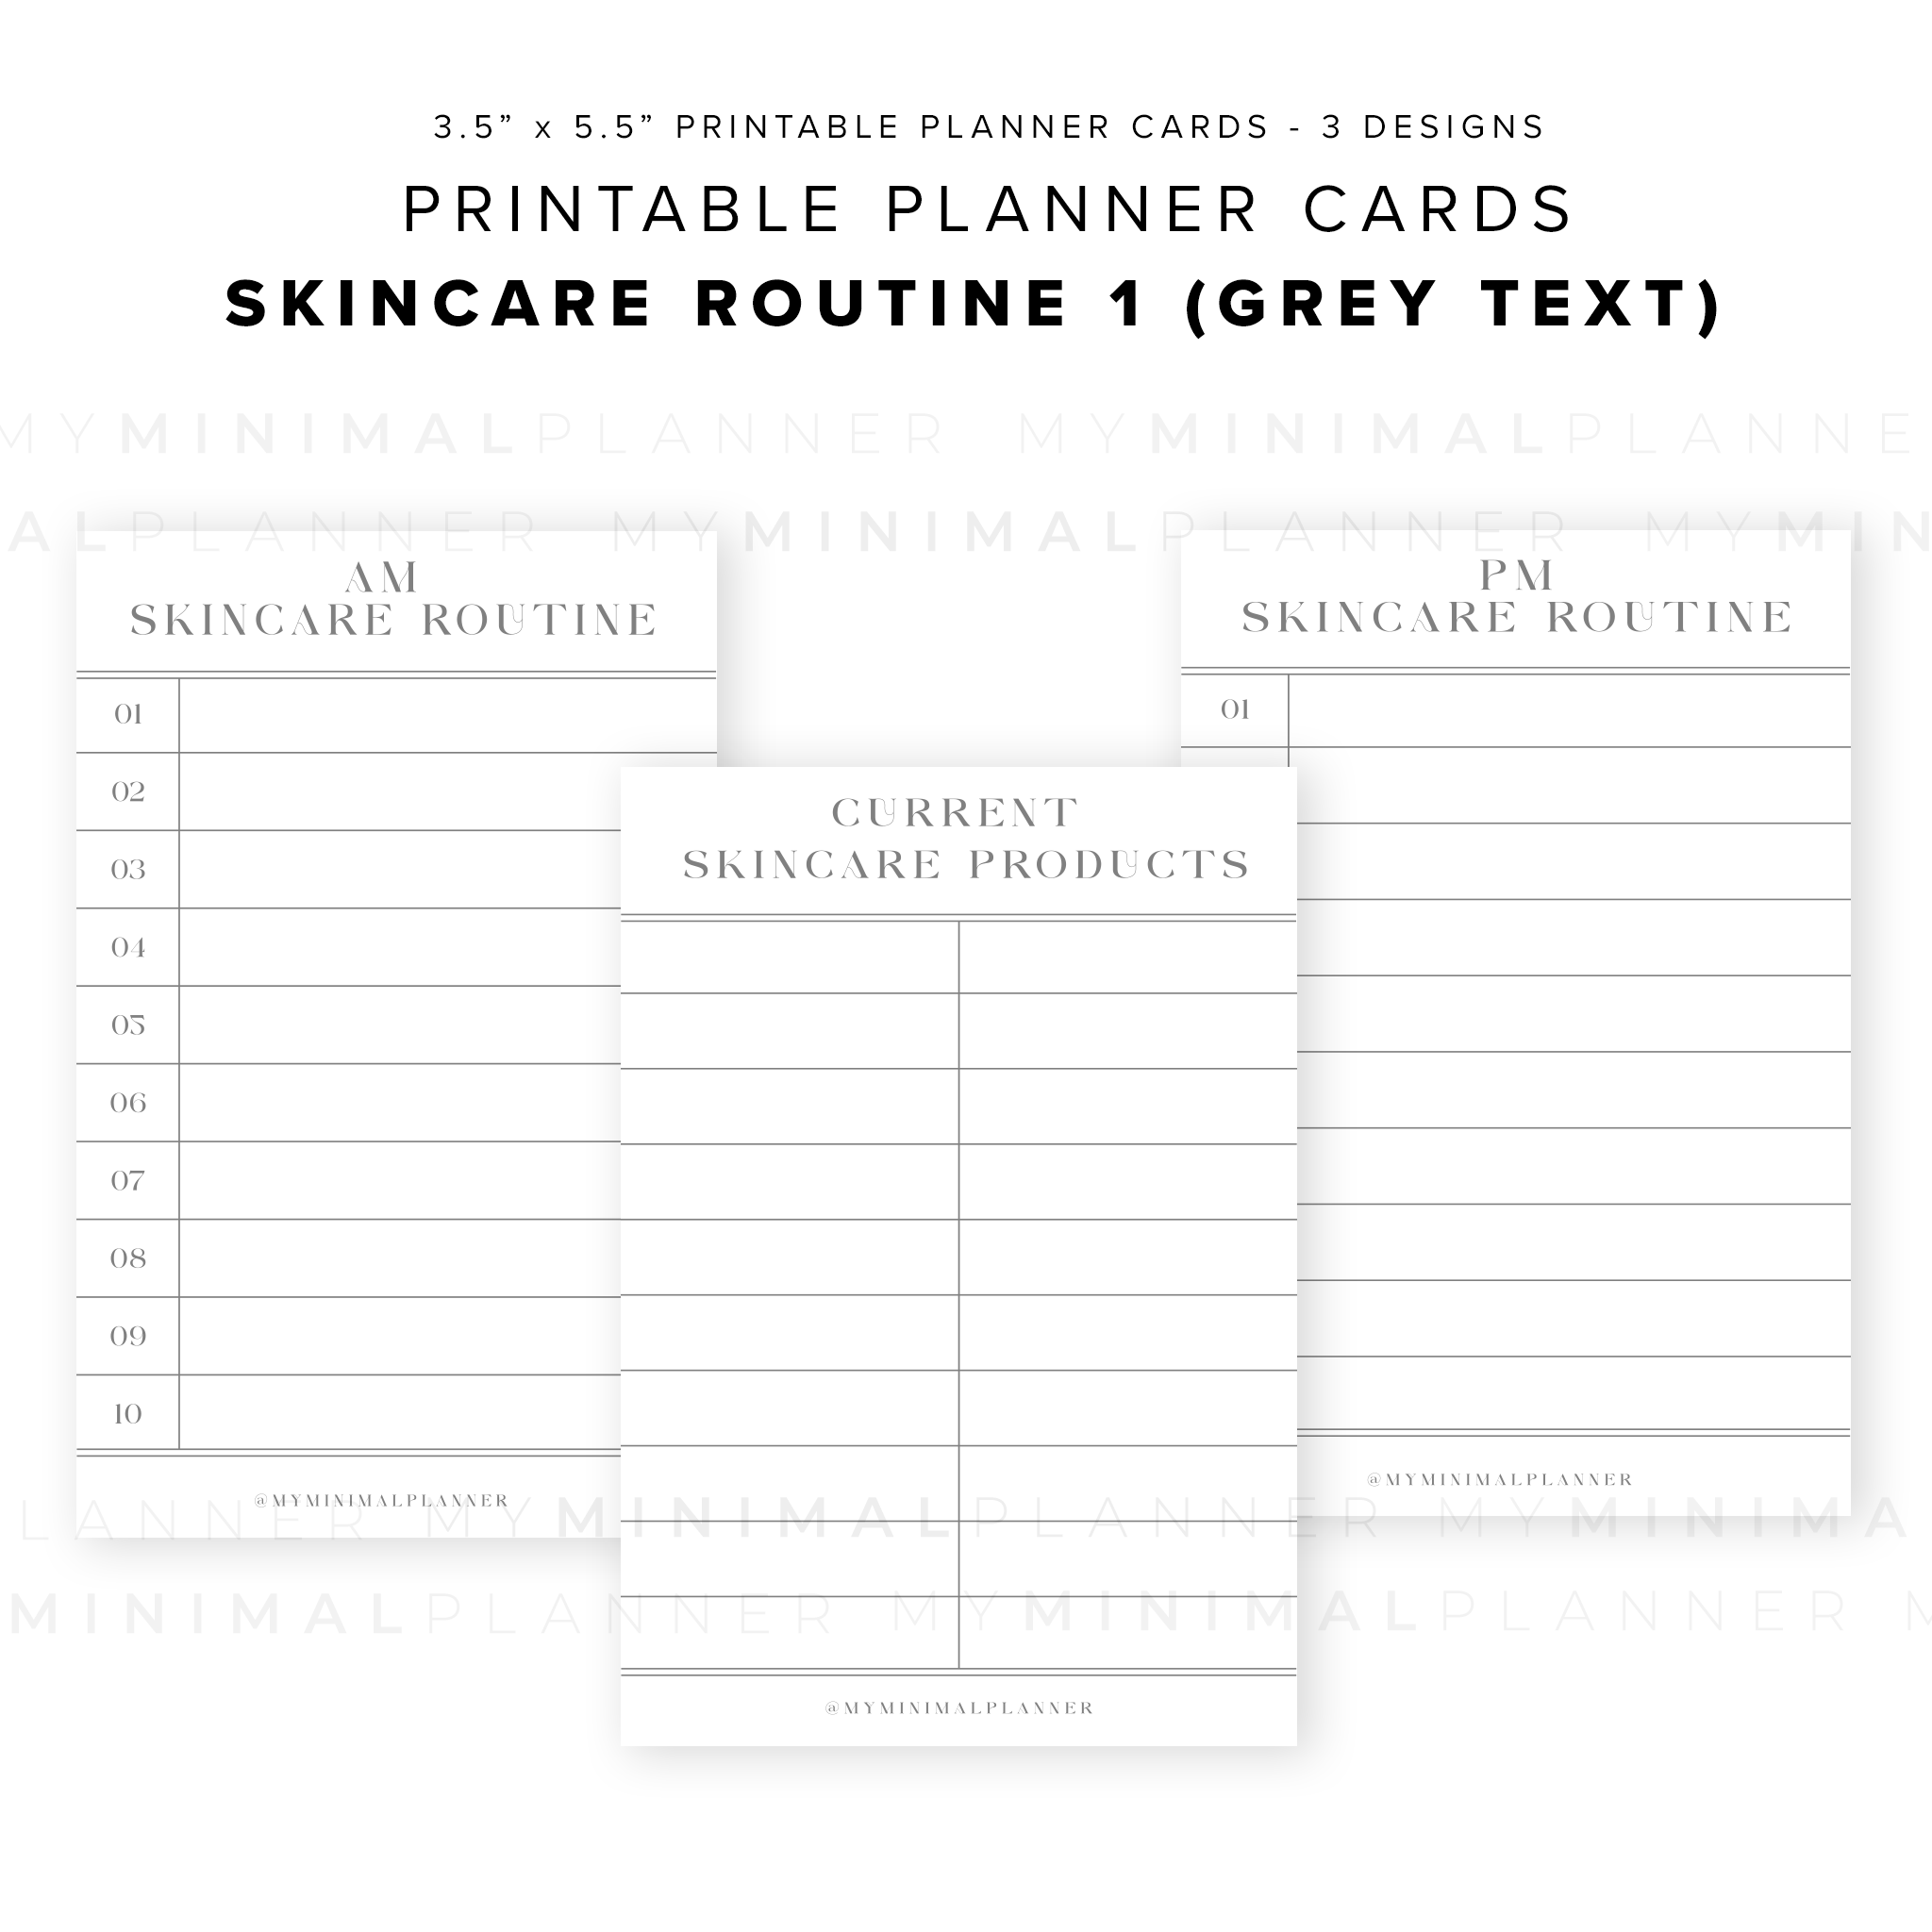 PPC21 - Skincare Routine 1 - Printable Planner Cards